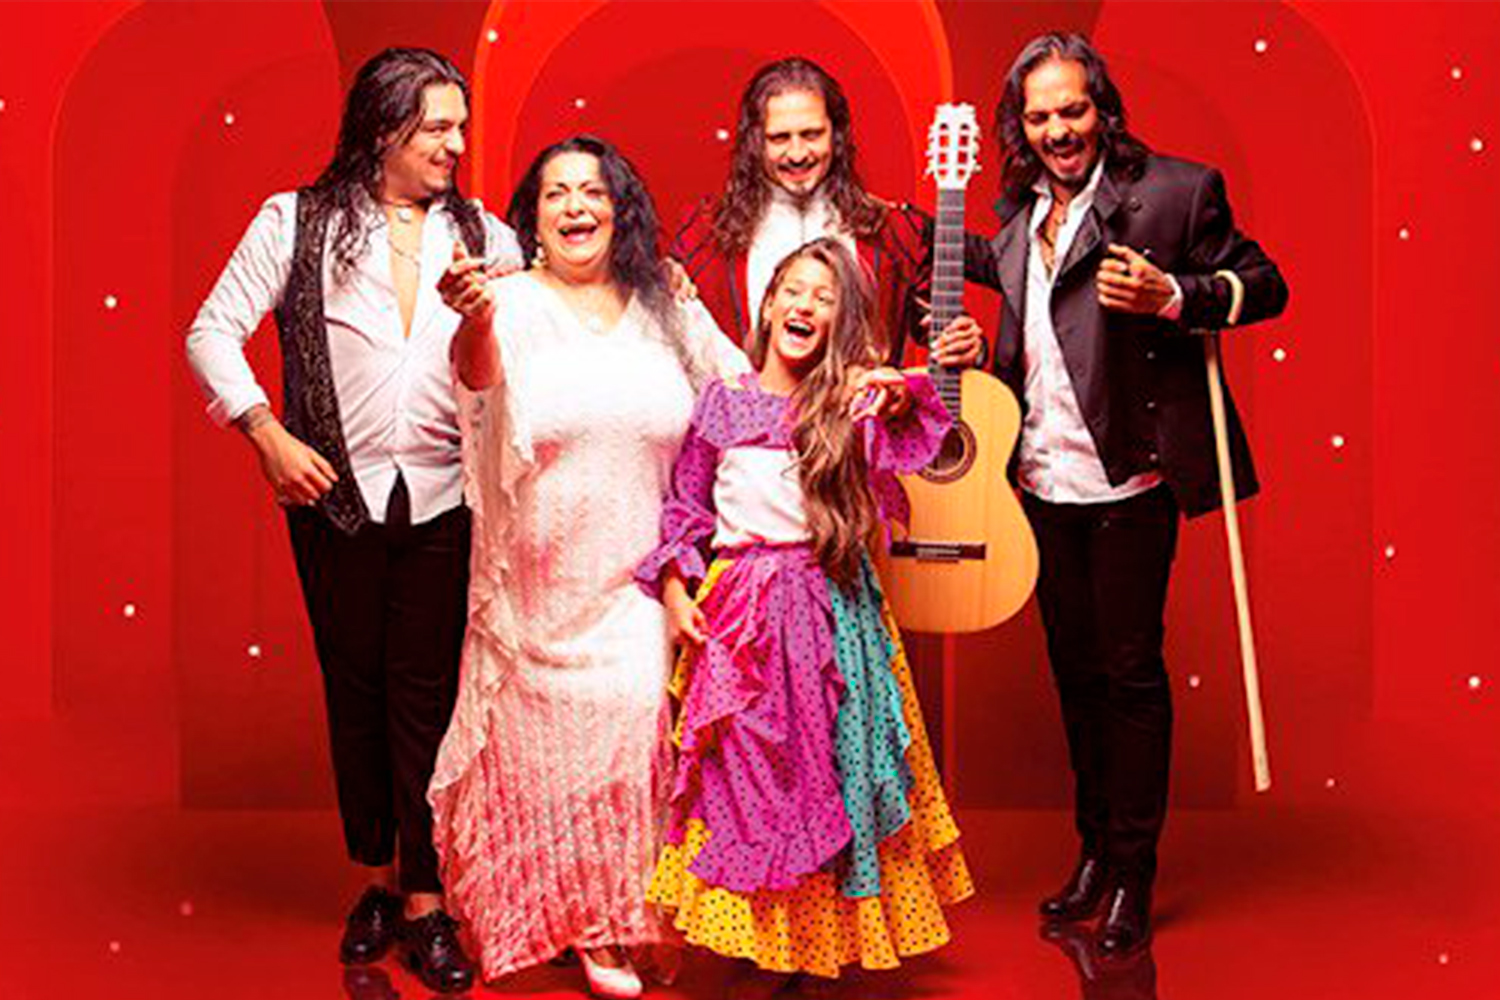 Cantaores flamencos Farrucos y Fernández